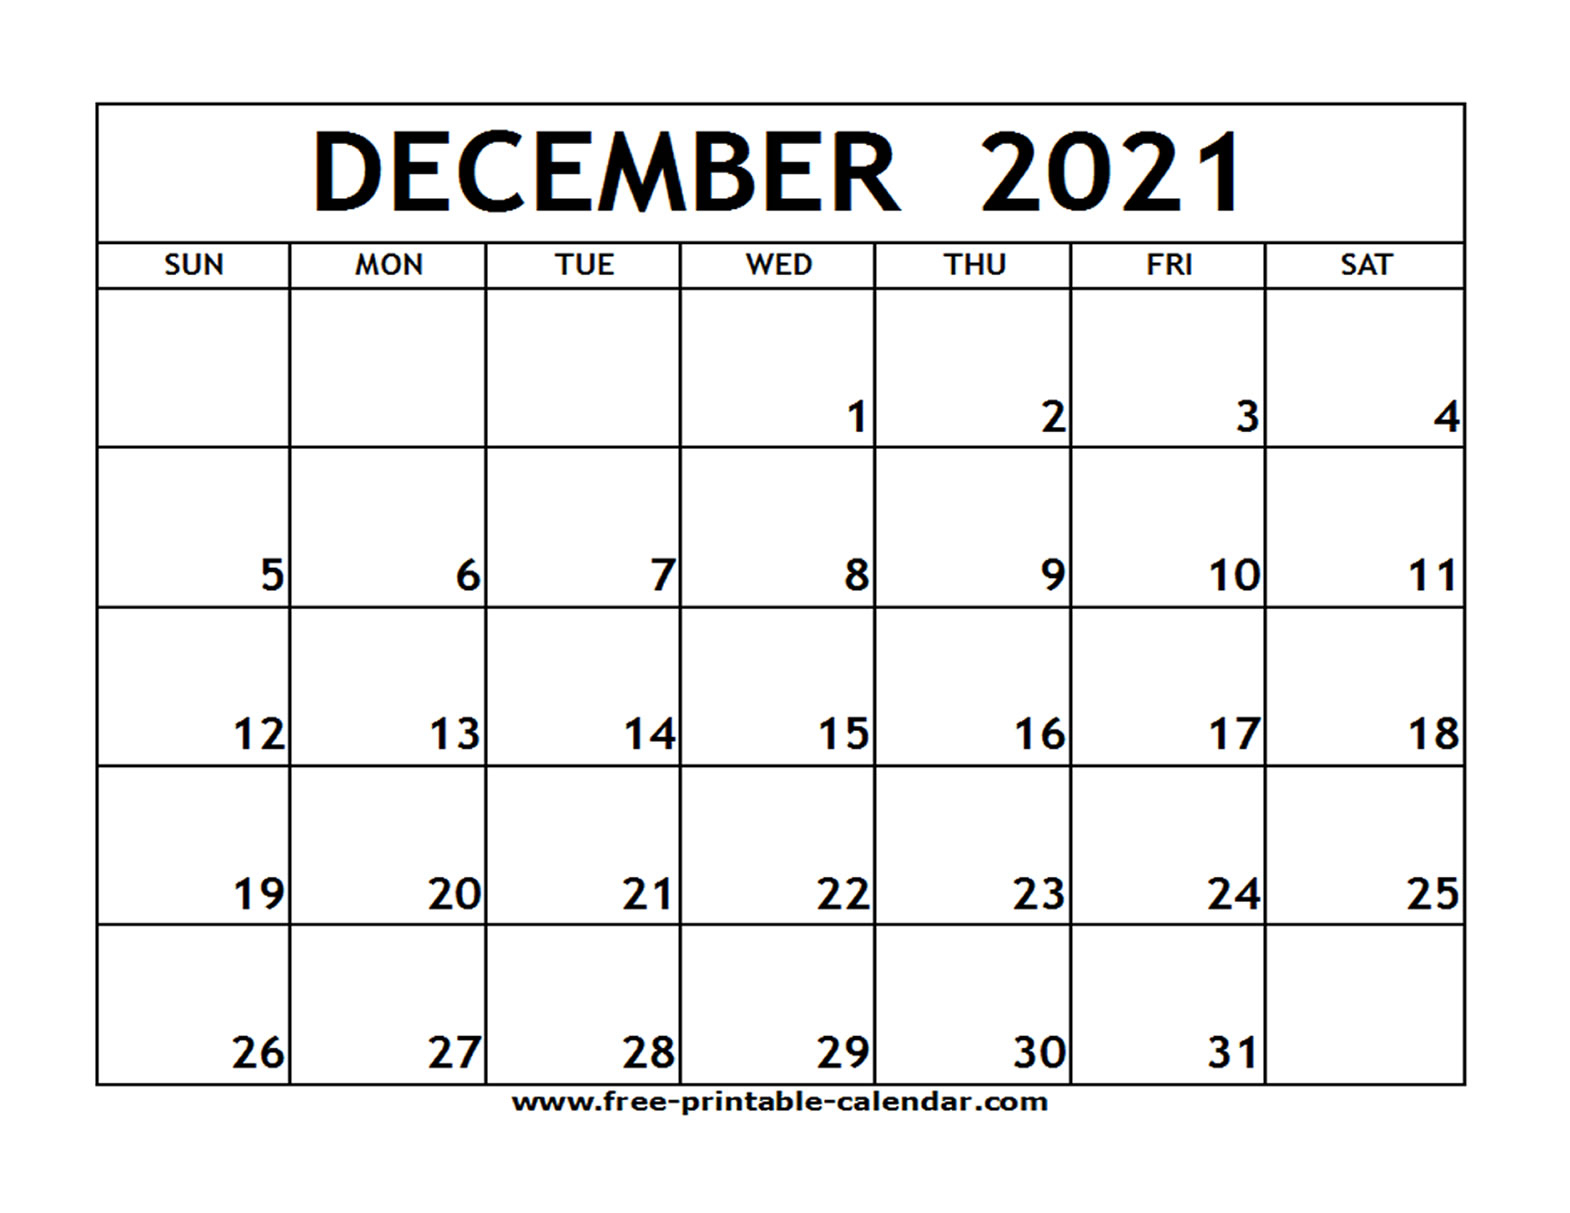 Dec 2021 Printable Calendar Free Printable Calendar